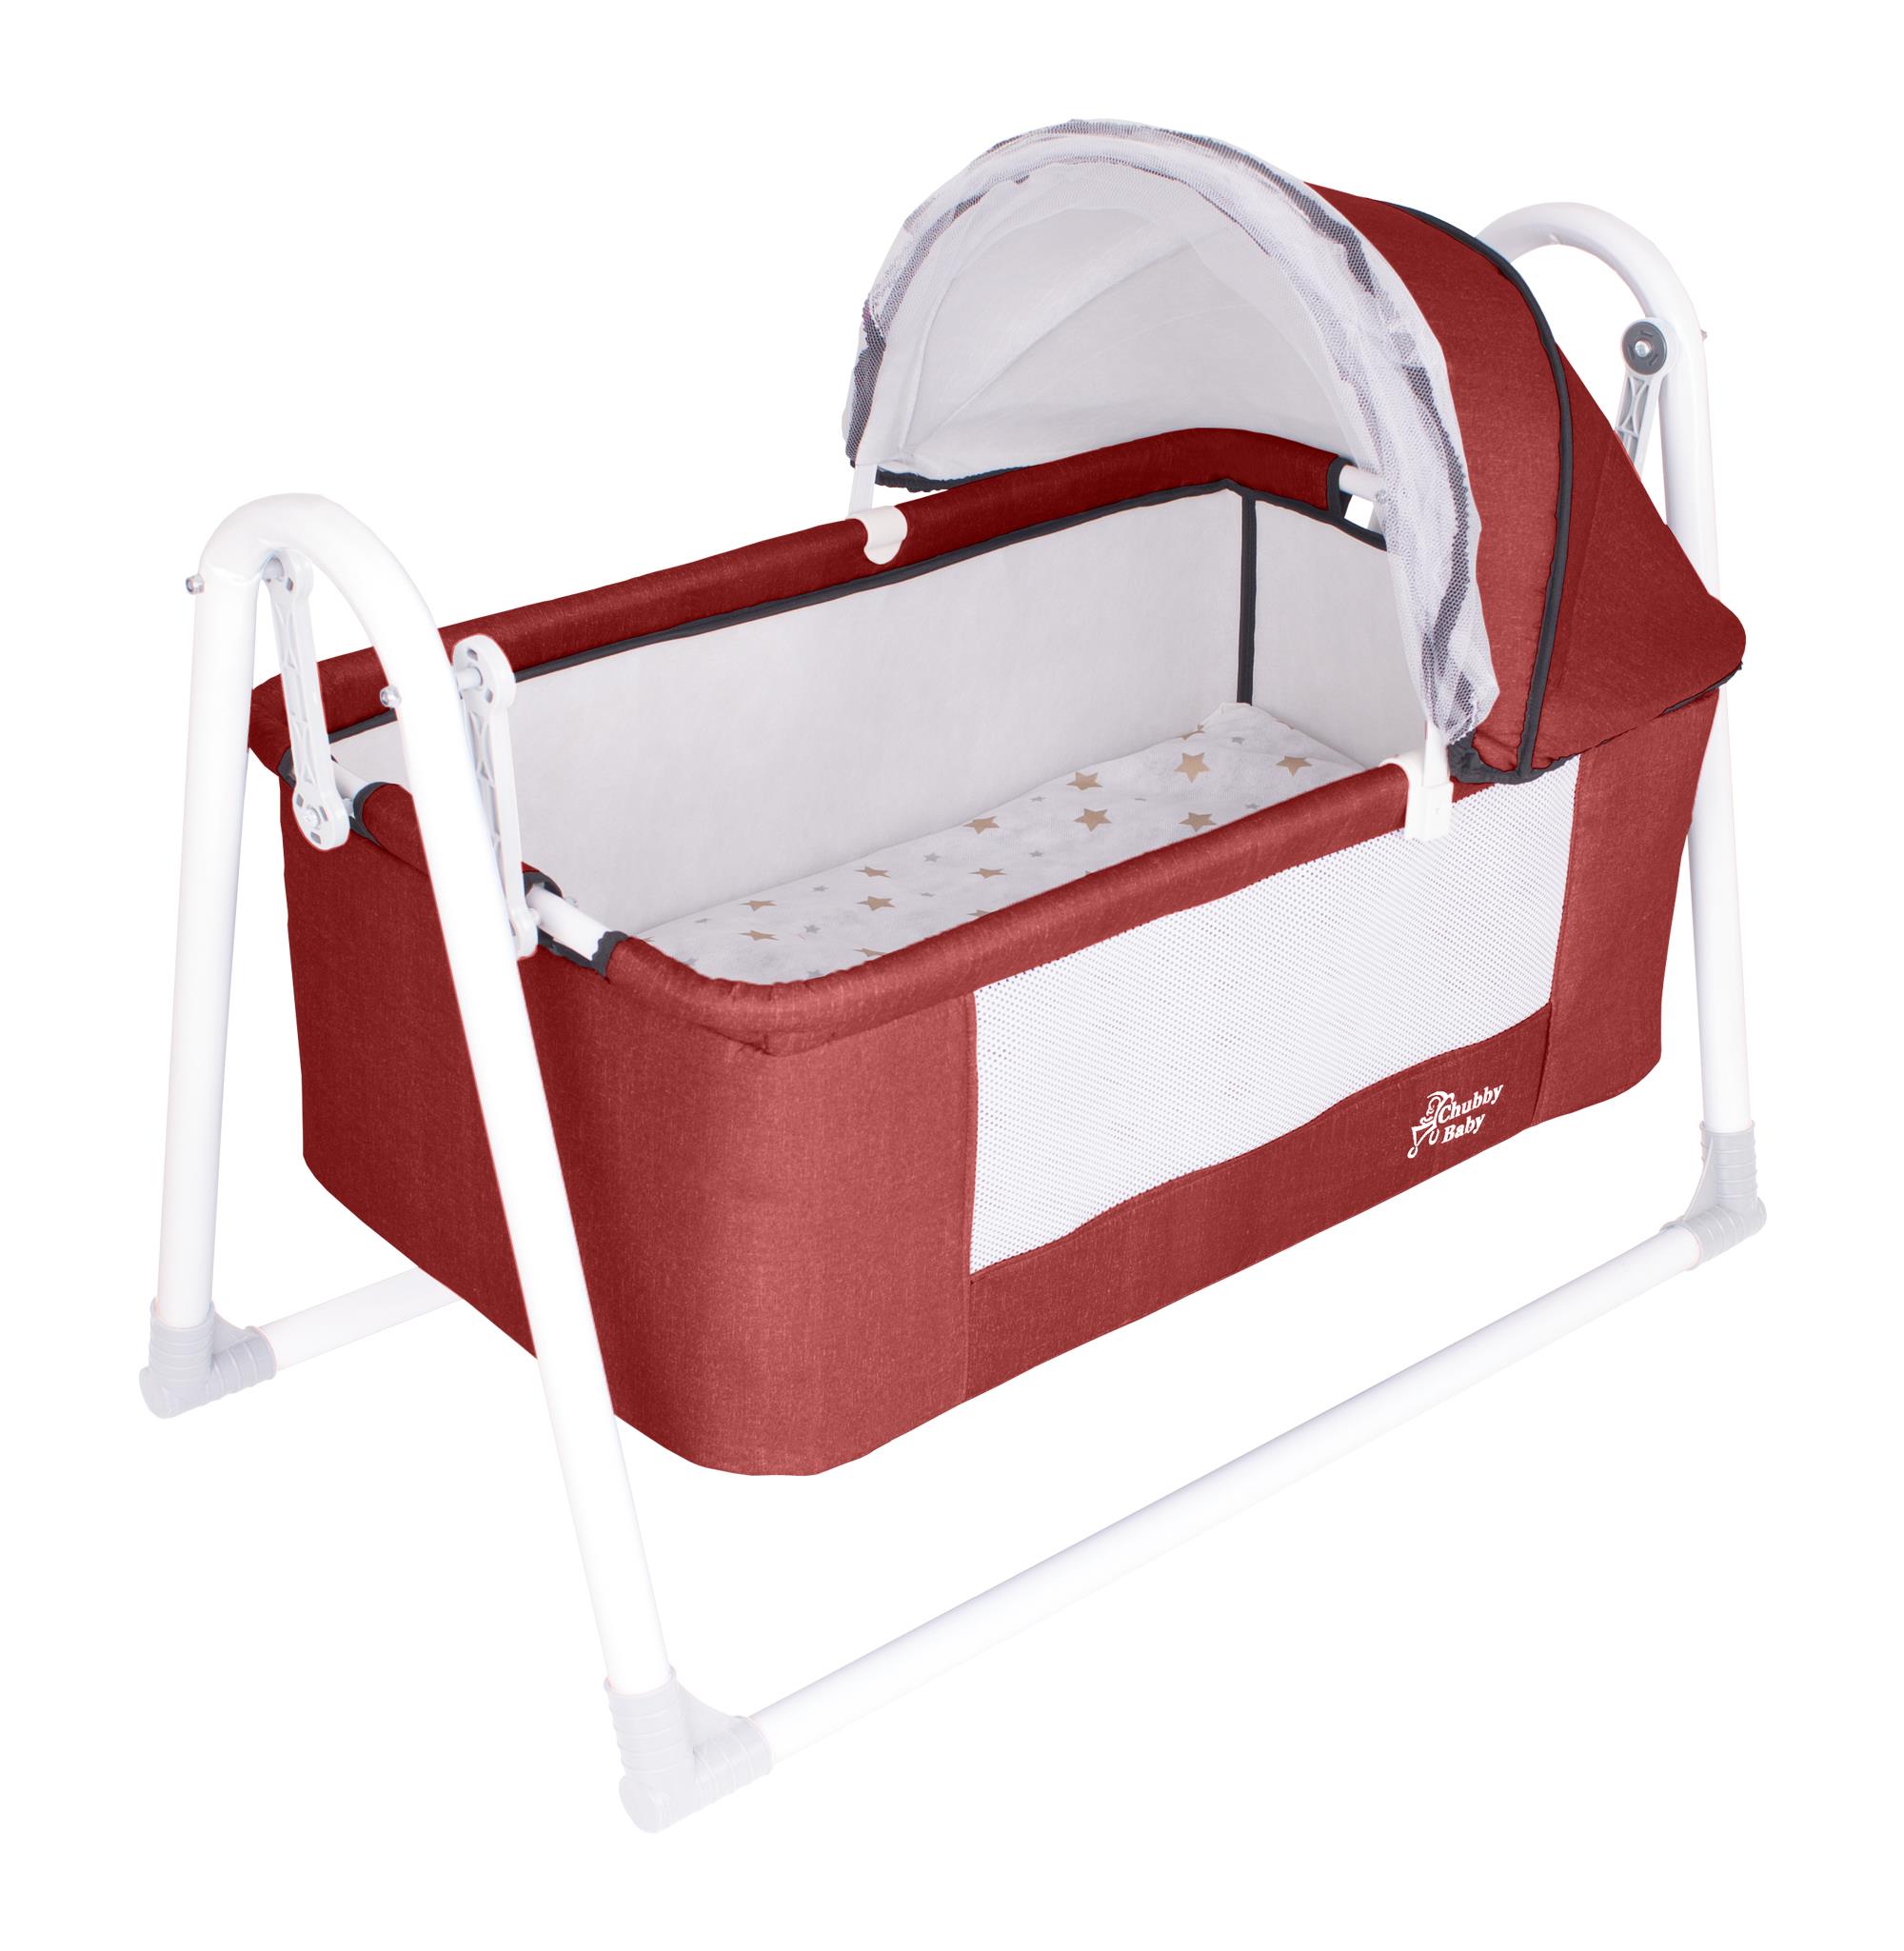 Chubby Baby First Class Portatif-Keten Tenteli Sepet Beşik Silinebilir Kumaş Kırmızı